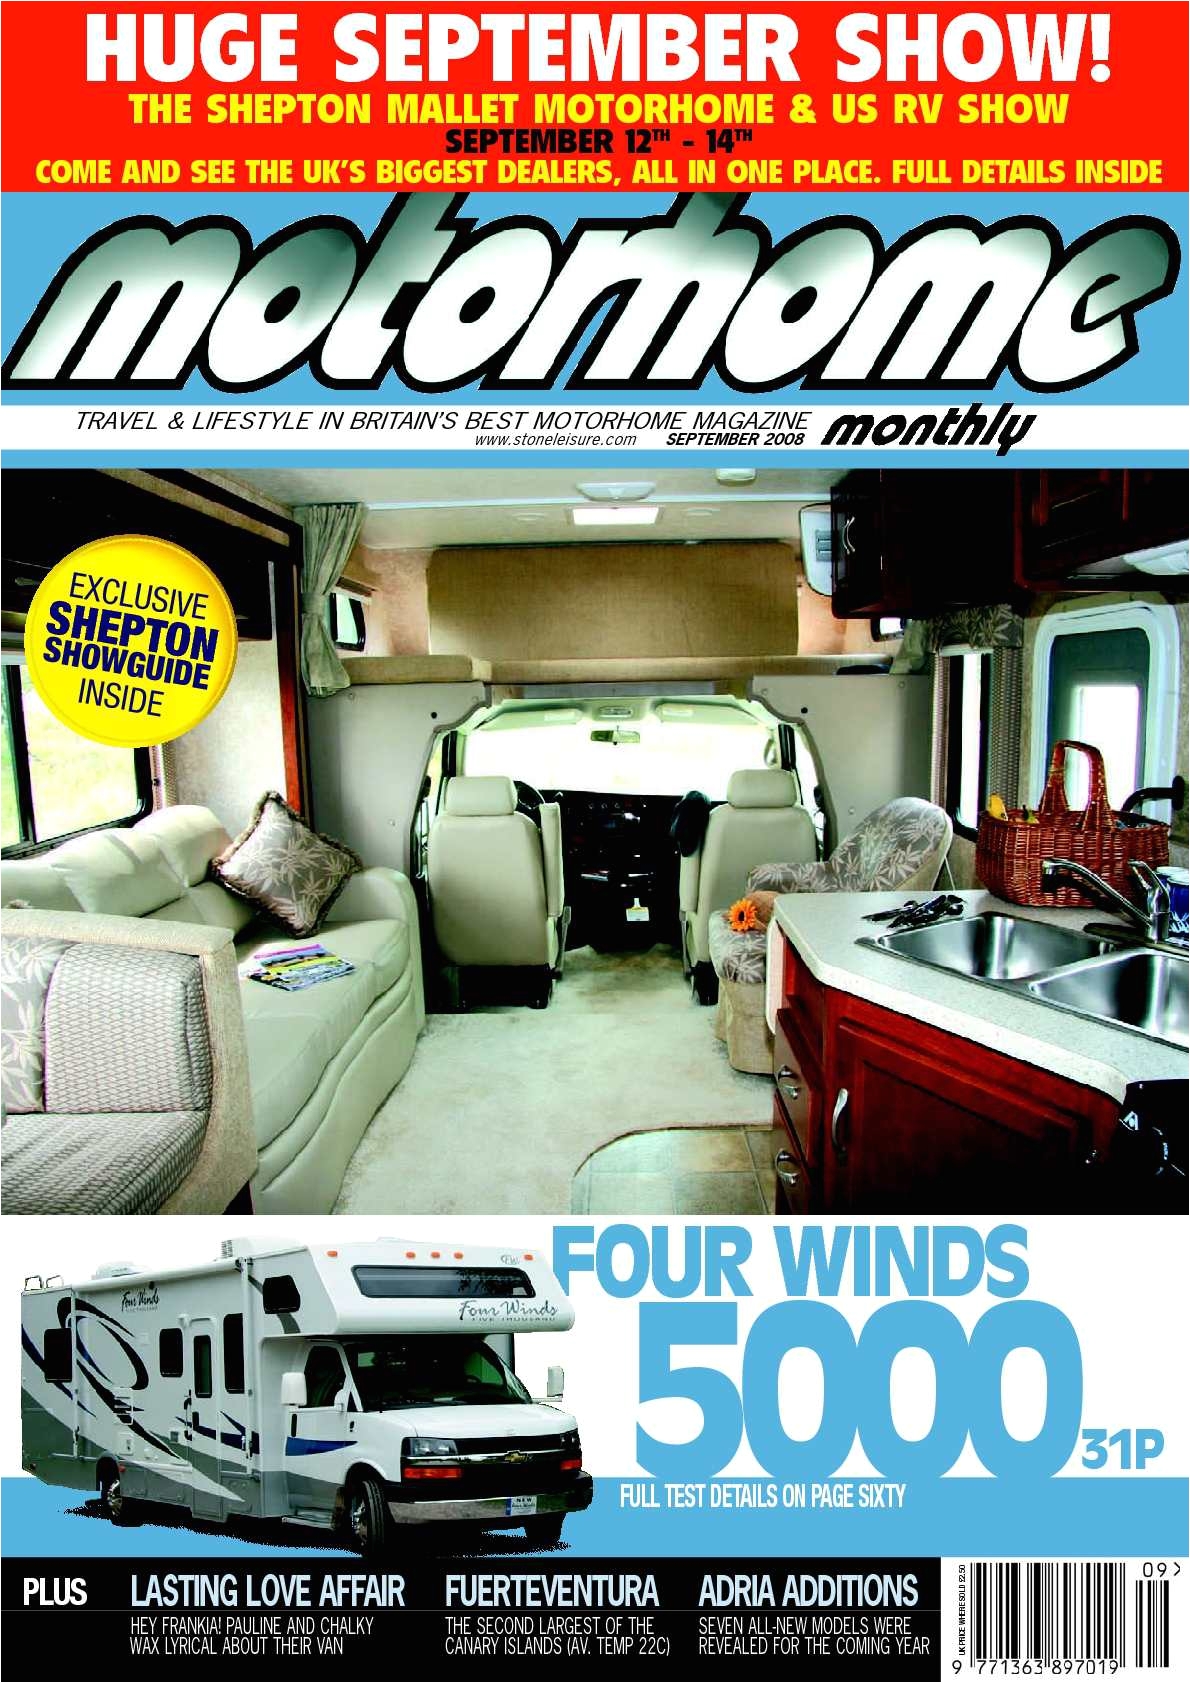 2 Bedroom Motorhome Uk Calameo September 2008 Motorhome Monthly Magazine